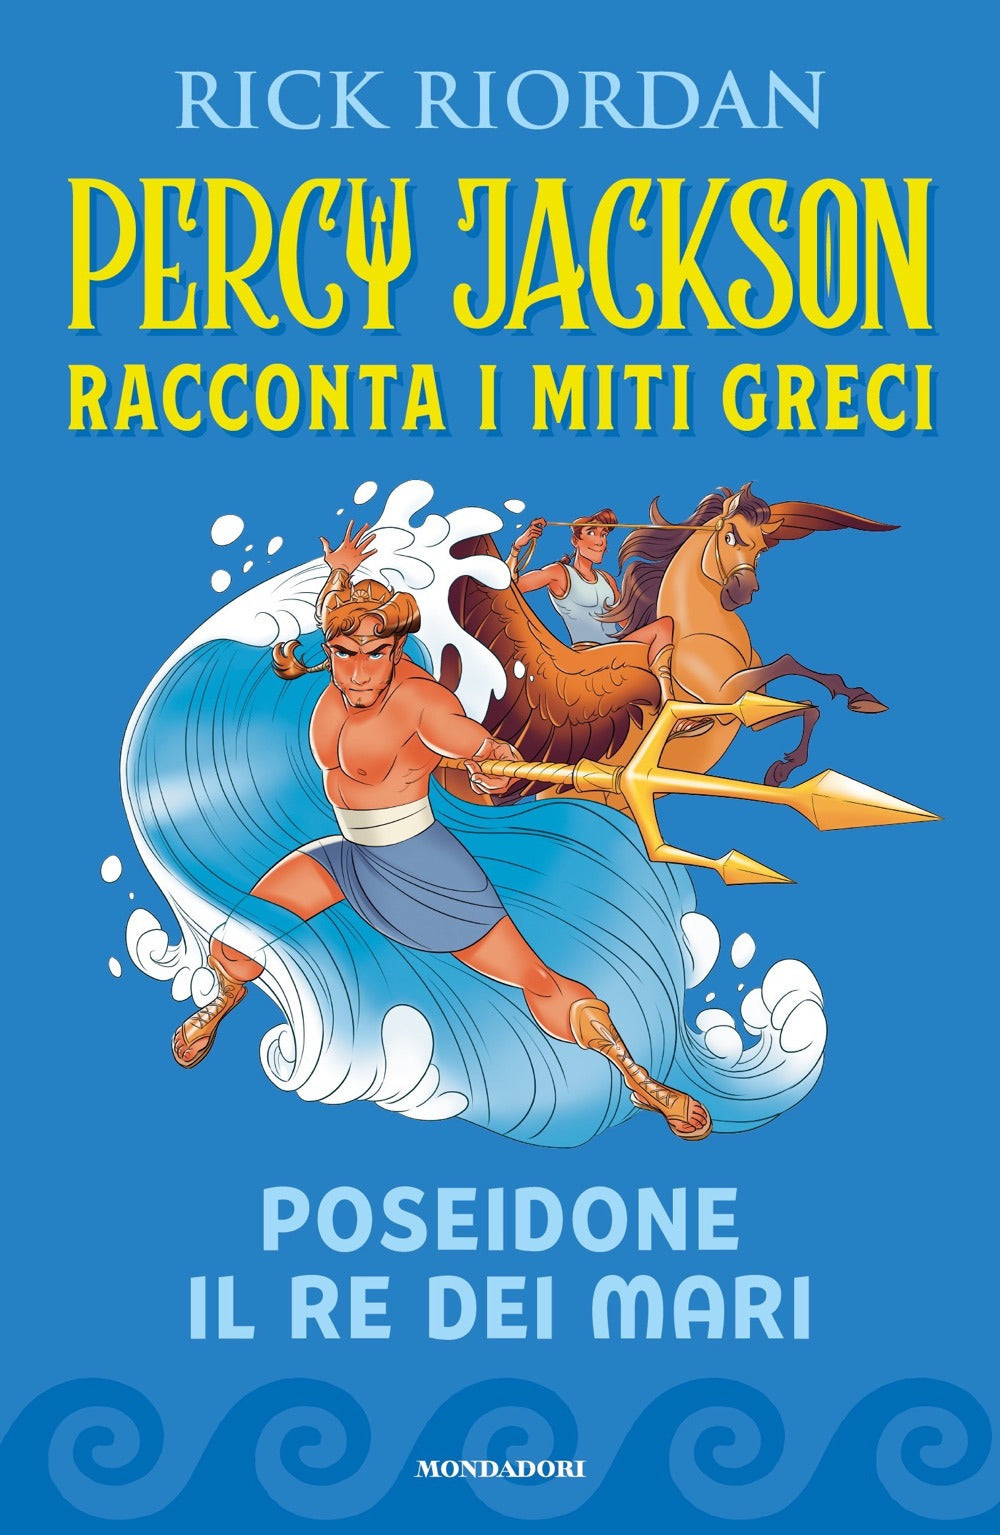 Poseidone il re dei mari. Percy Jackson racconta i miti greci.